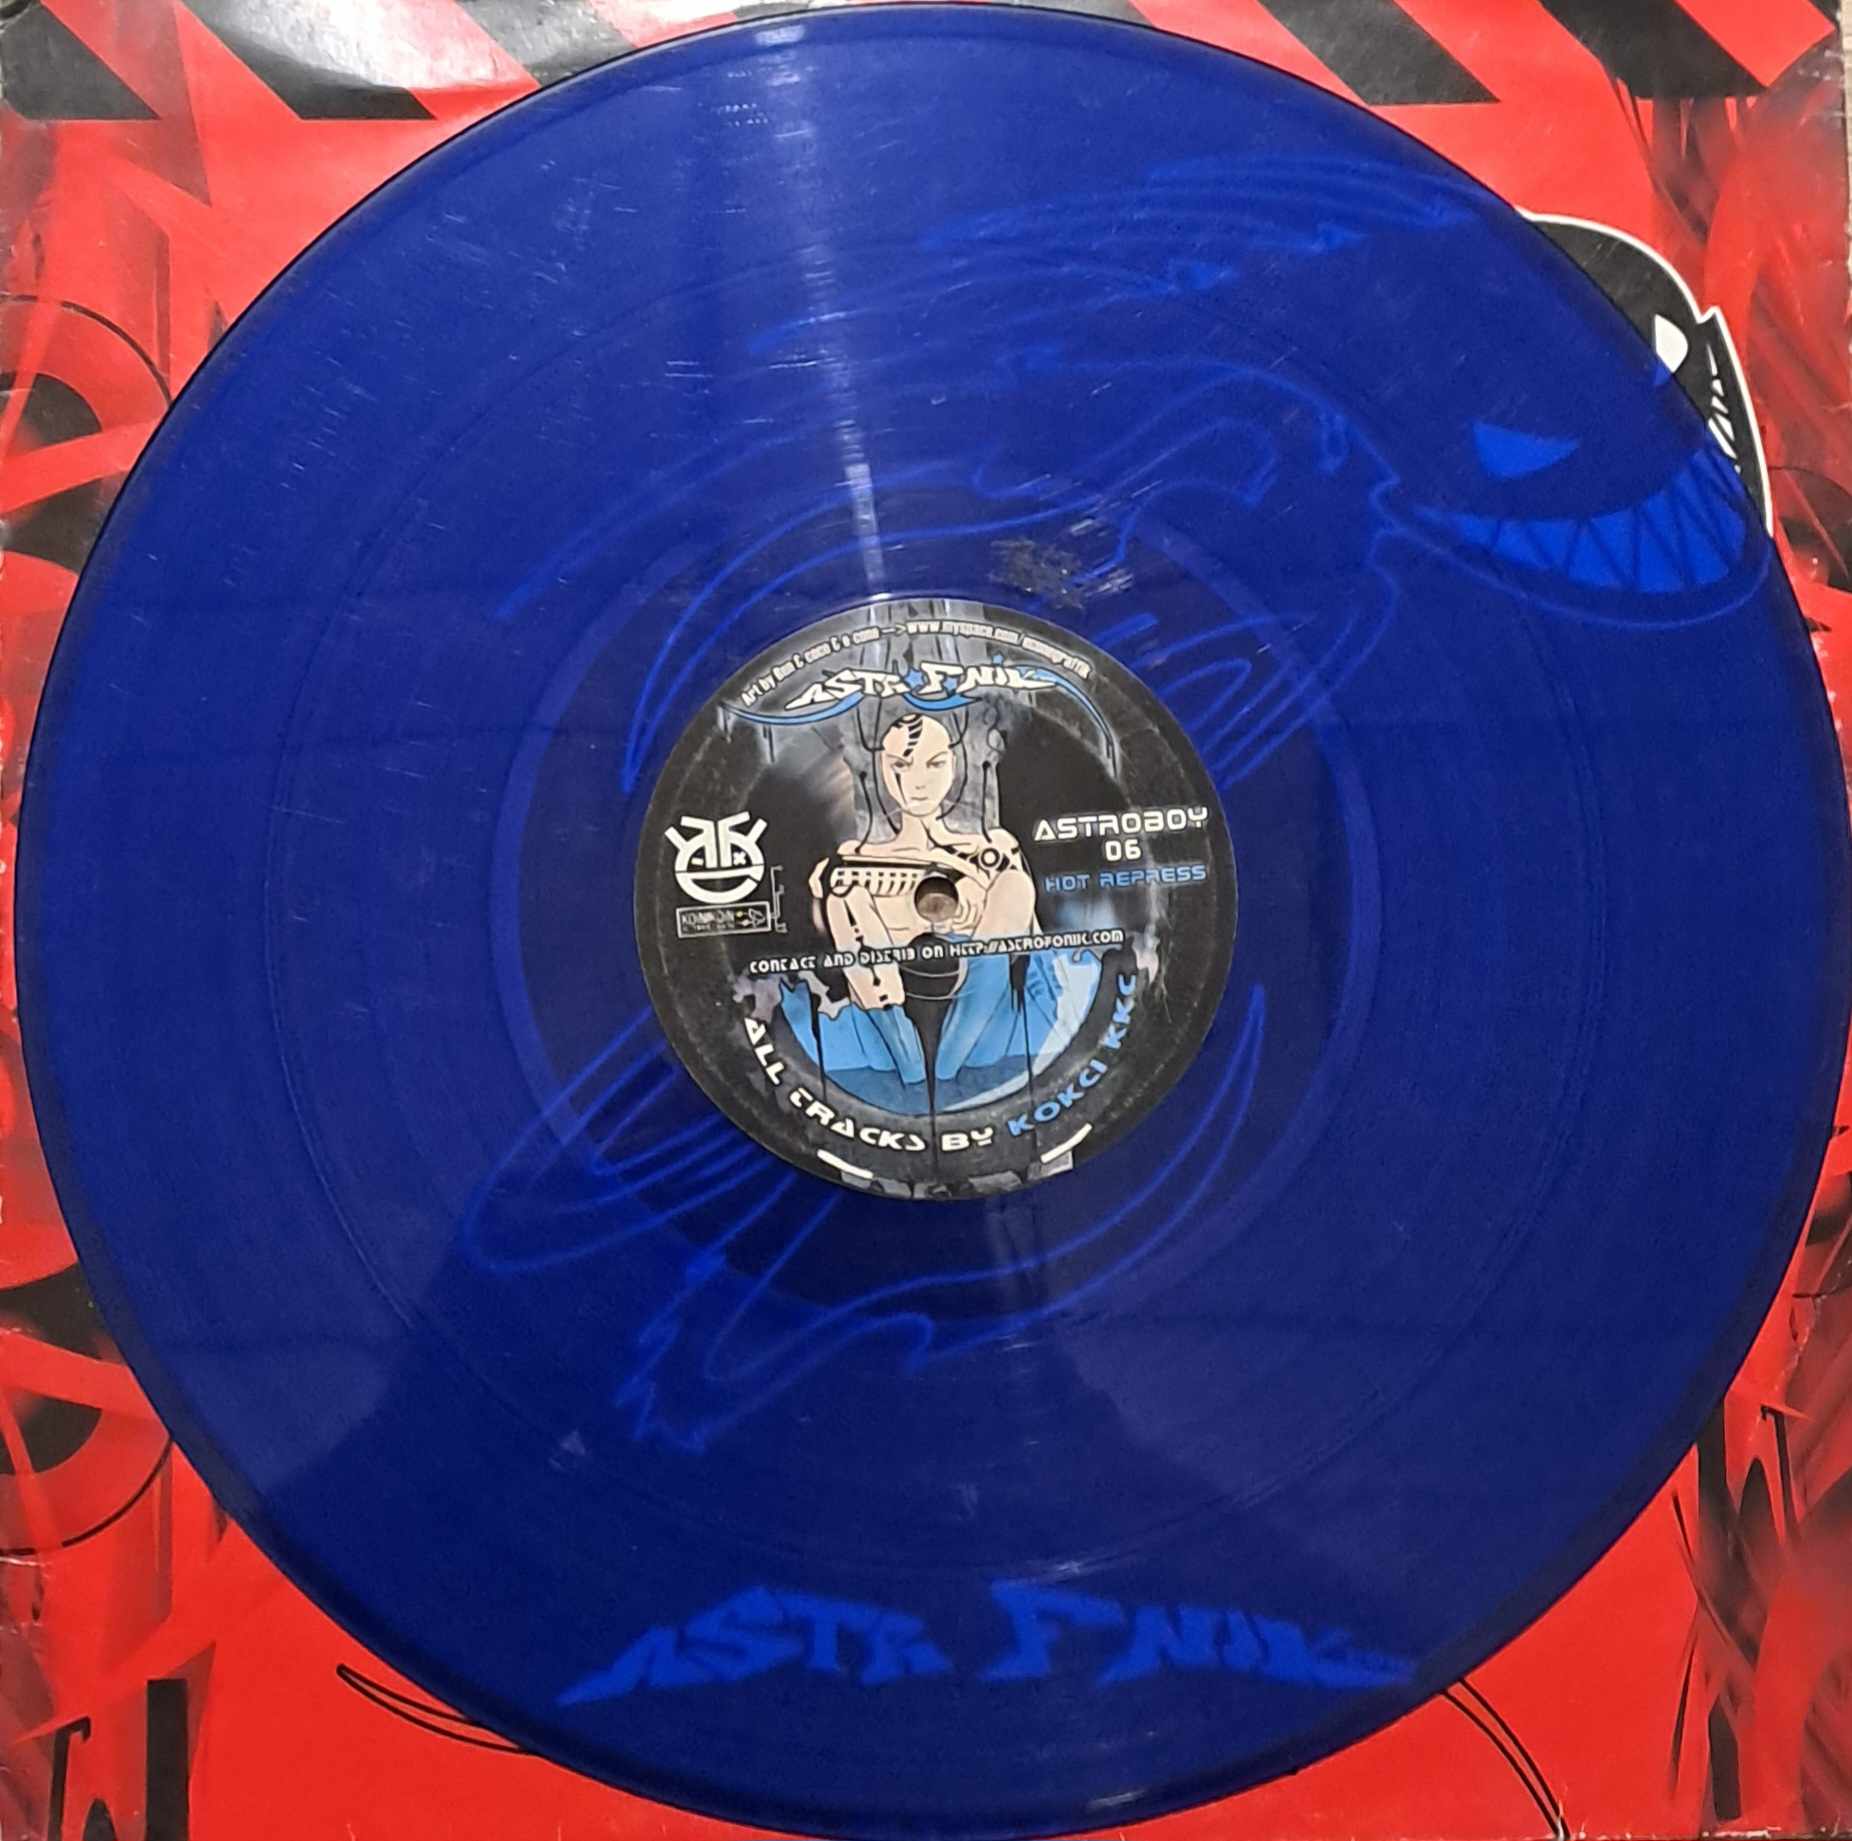 Astroboy 06 (bleu transparent) - vinyle freetekno